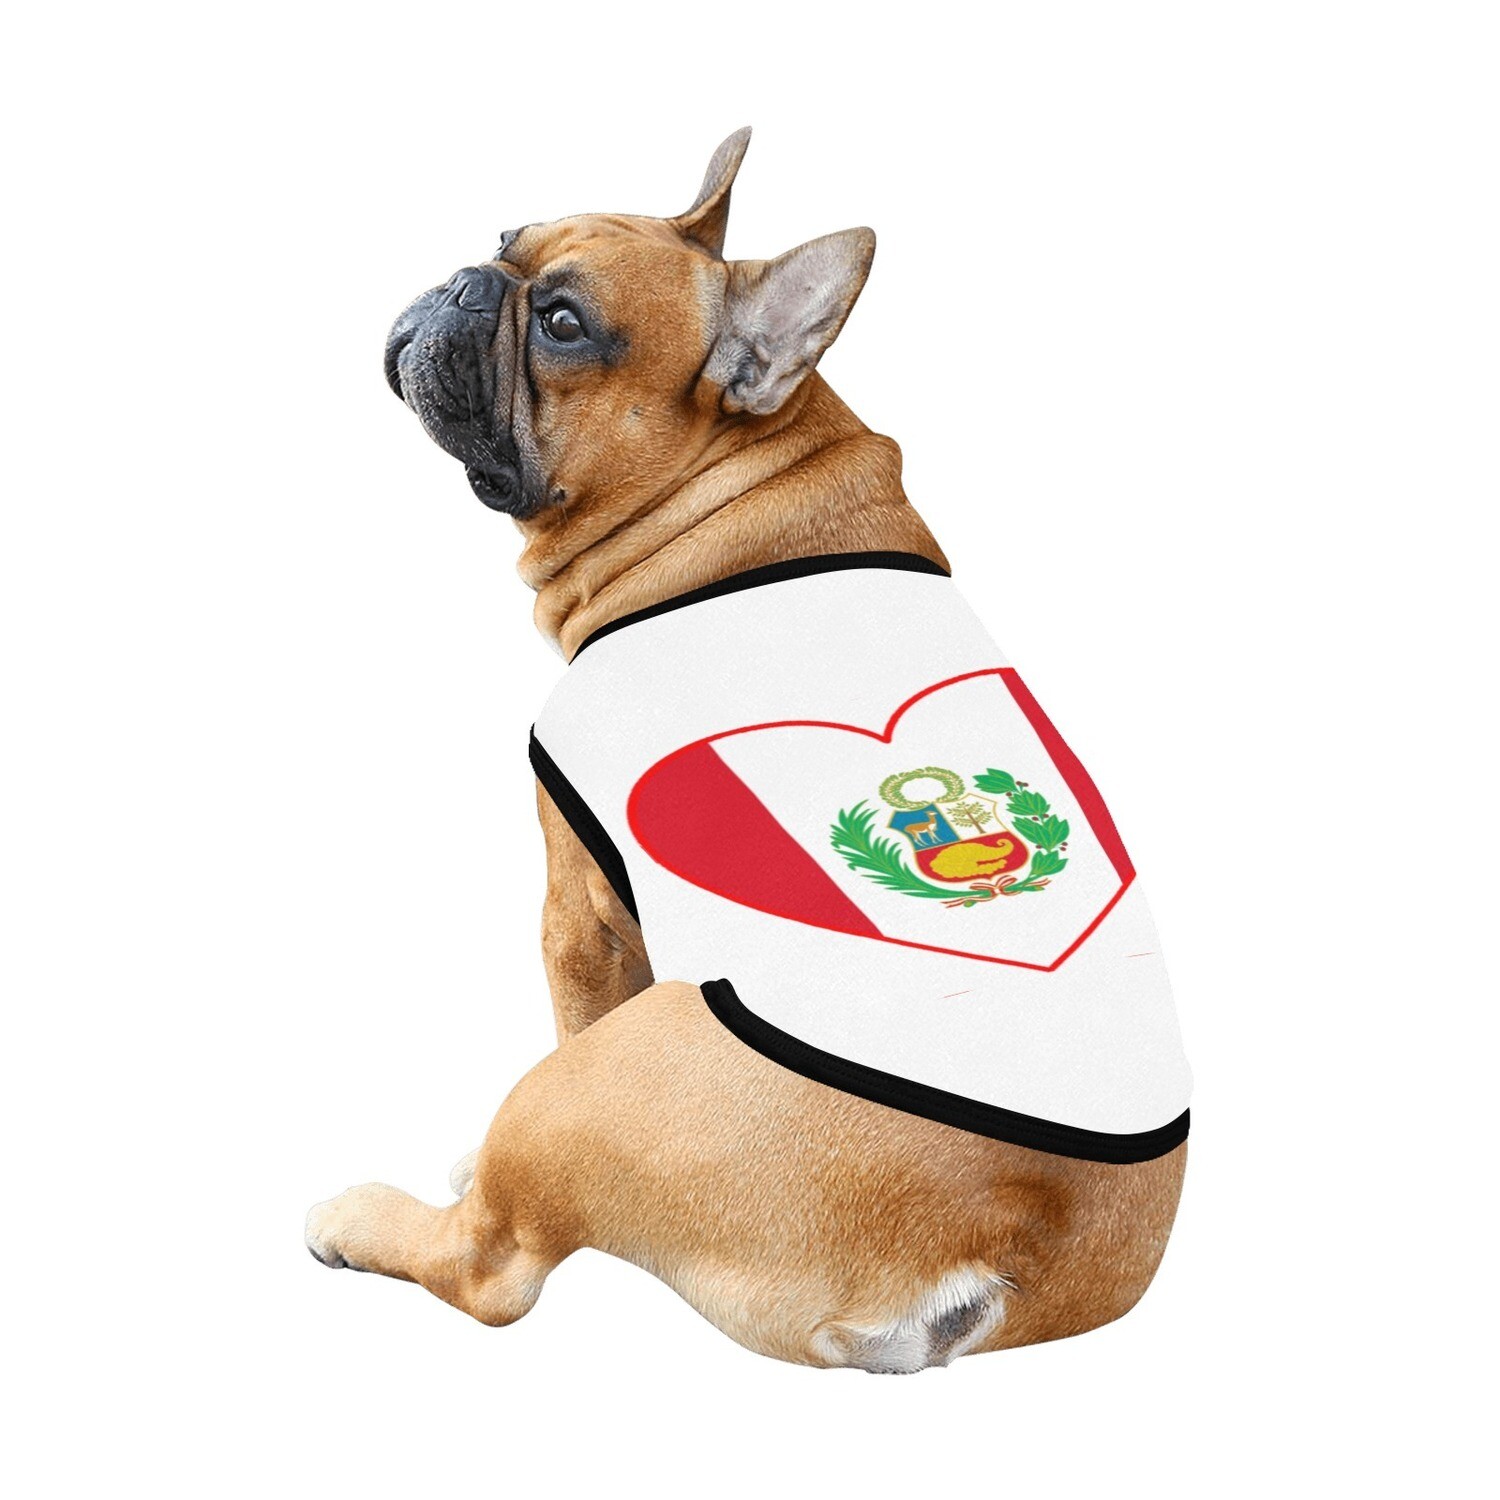 🐕 🇵🇪 I love Peru dog t-shirt, dog gift, dog tank top, dog shirt, dog clothes, gift, 7 sizes XS to 3XL, Peruvian flag, heart shape, white